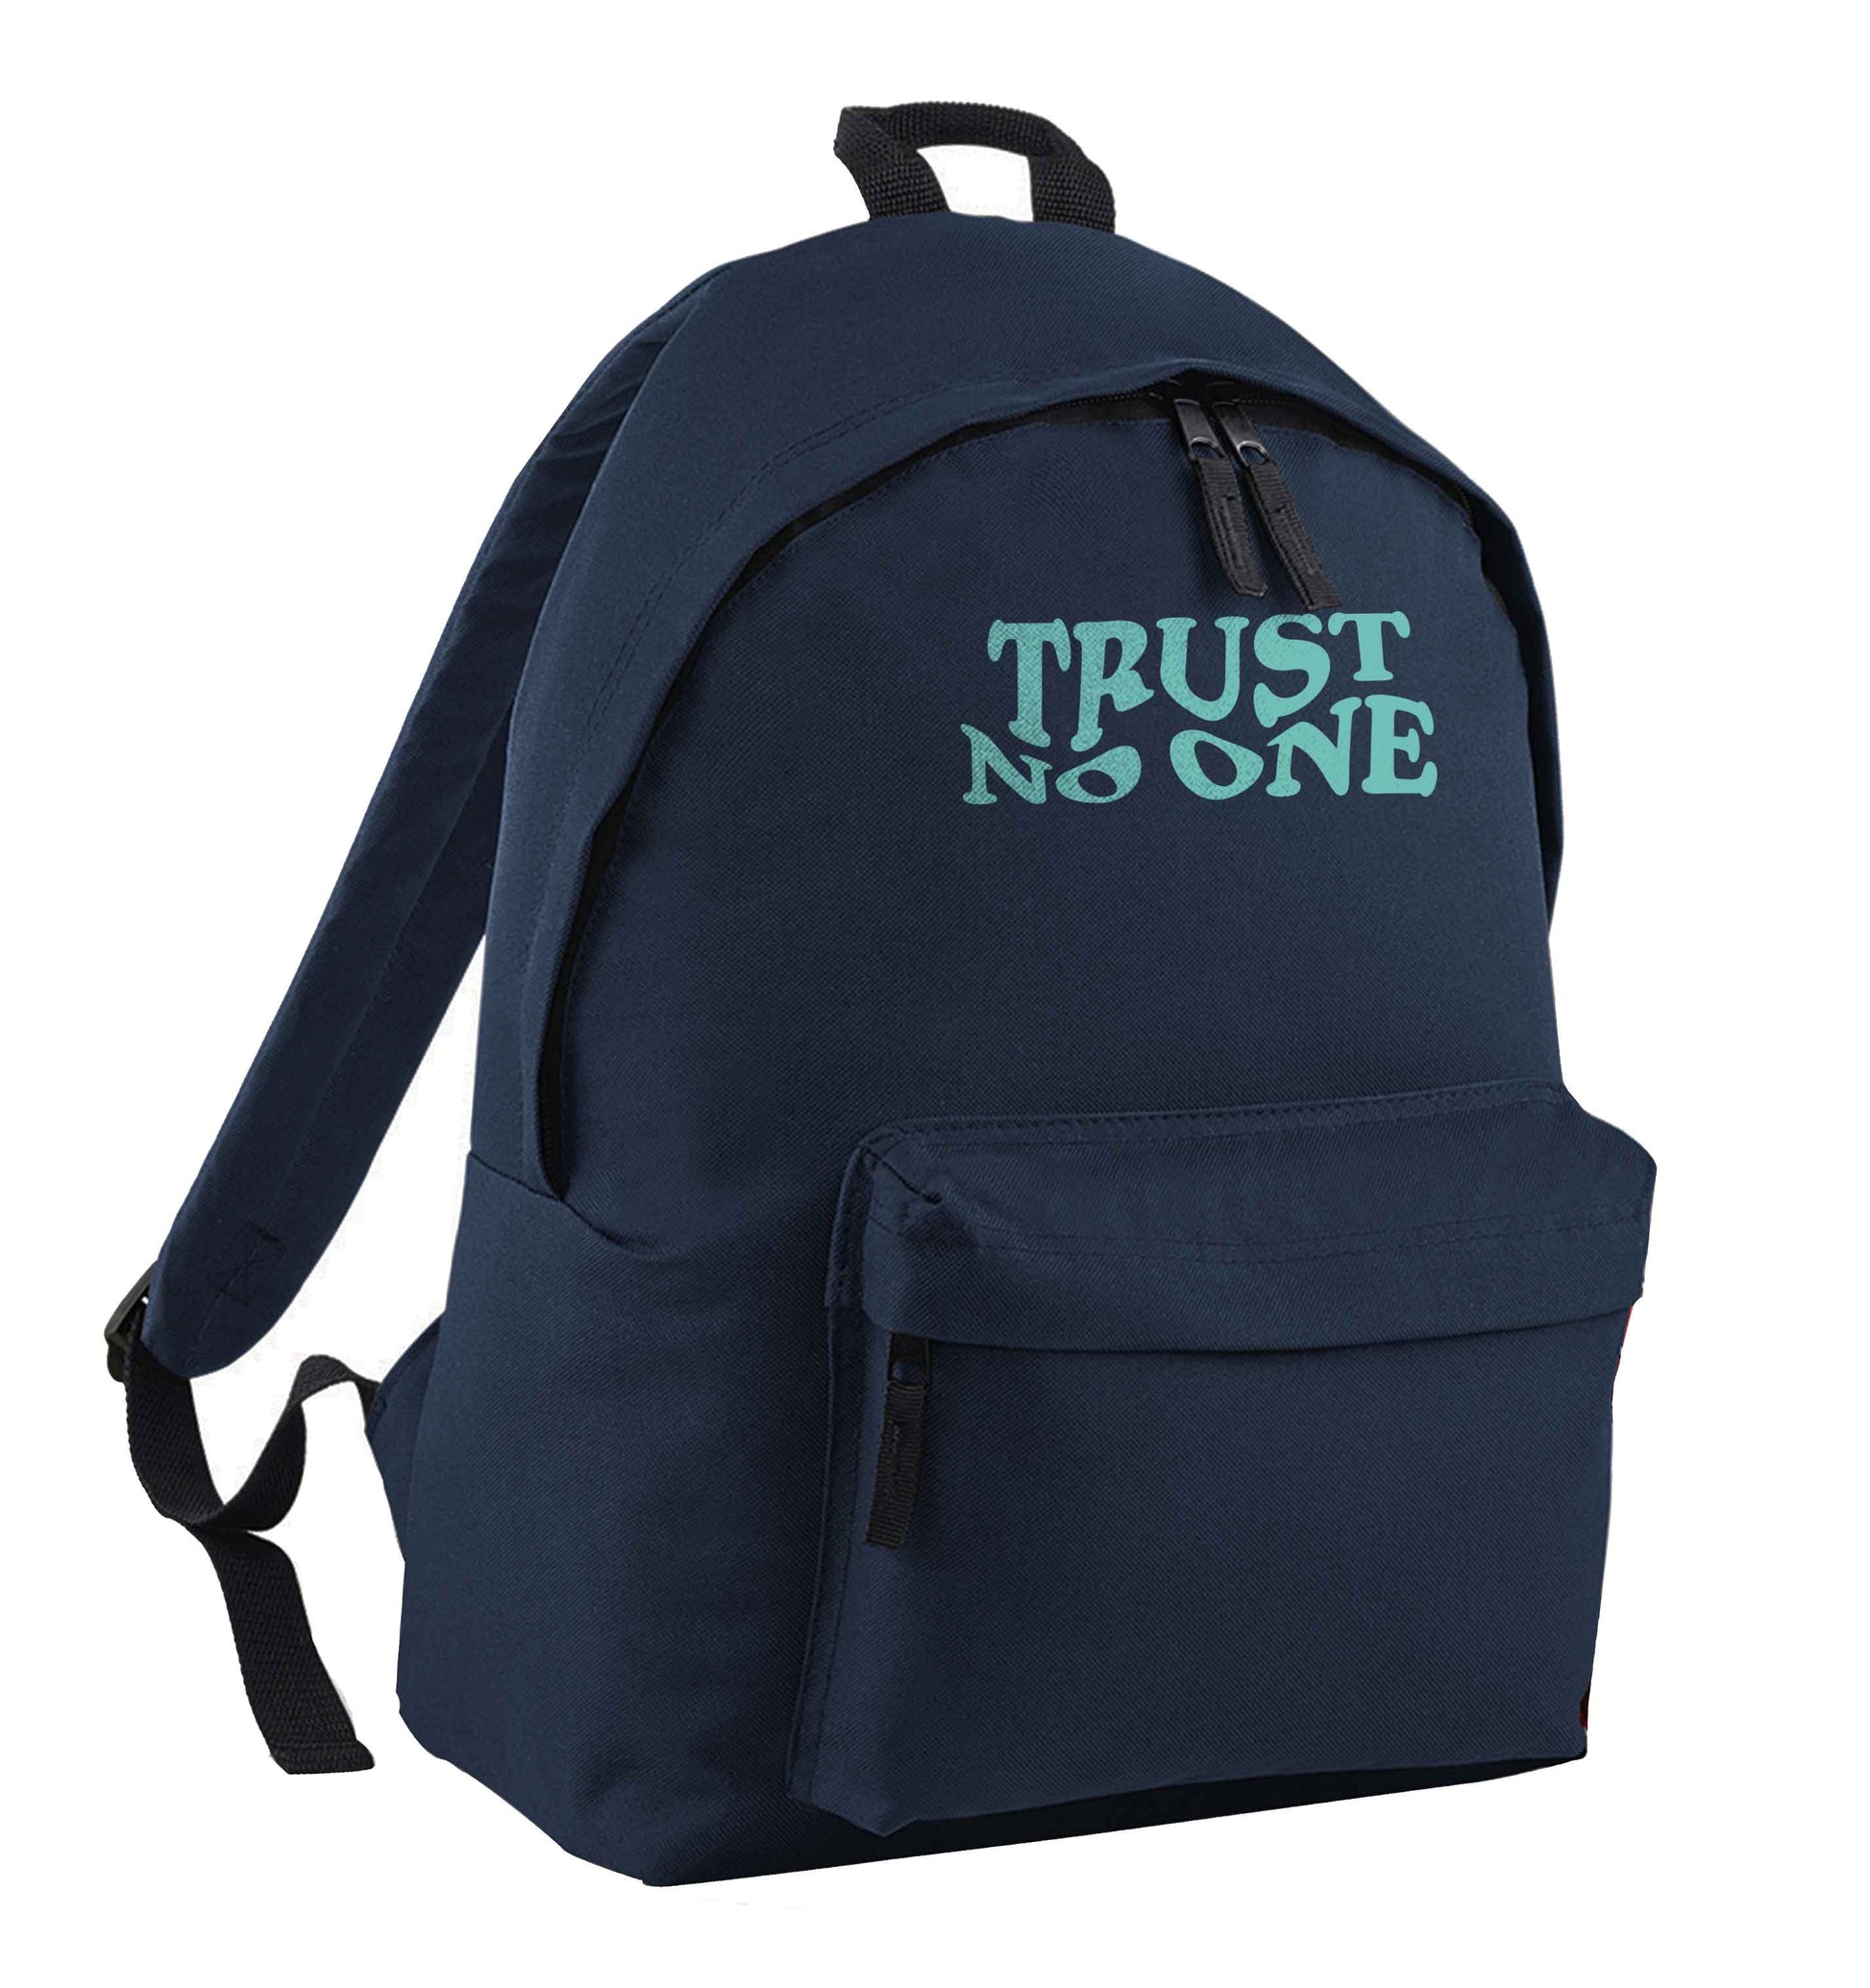 Trust no one navy children's backpack